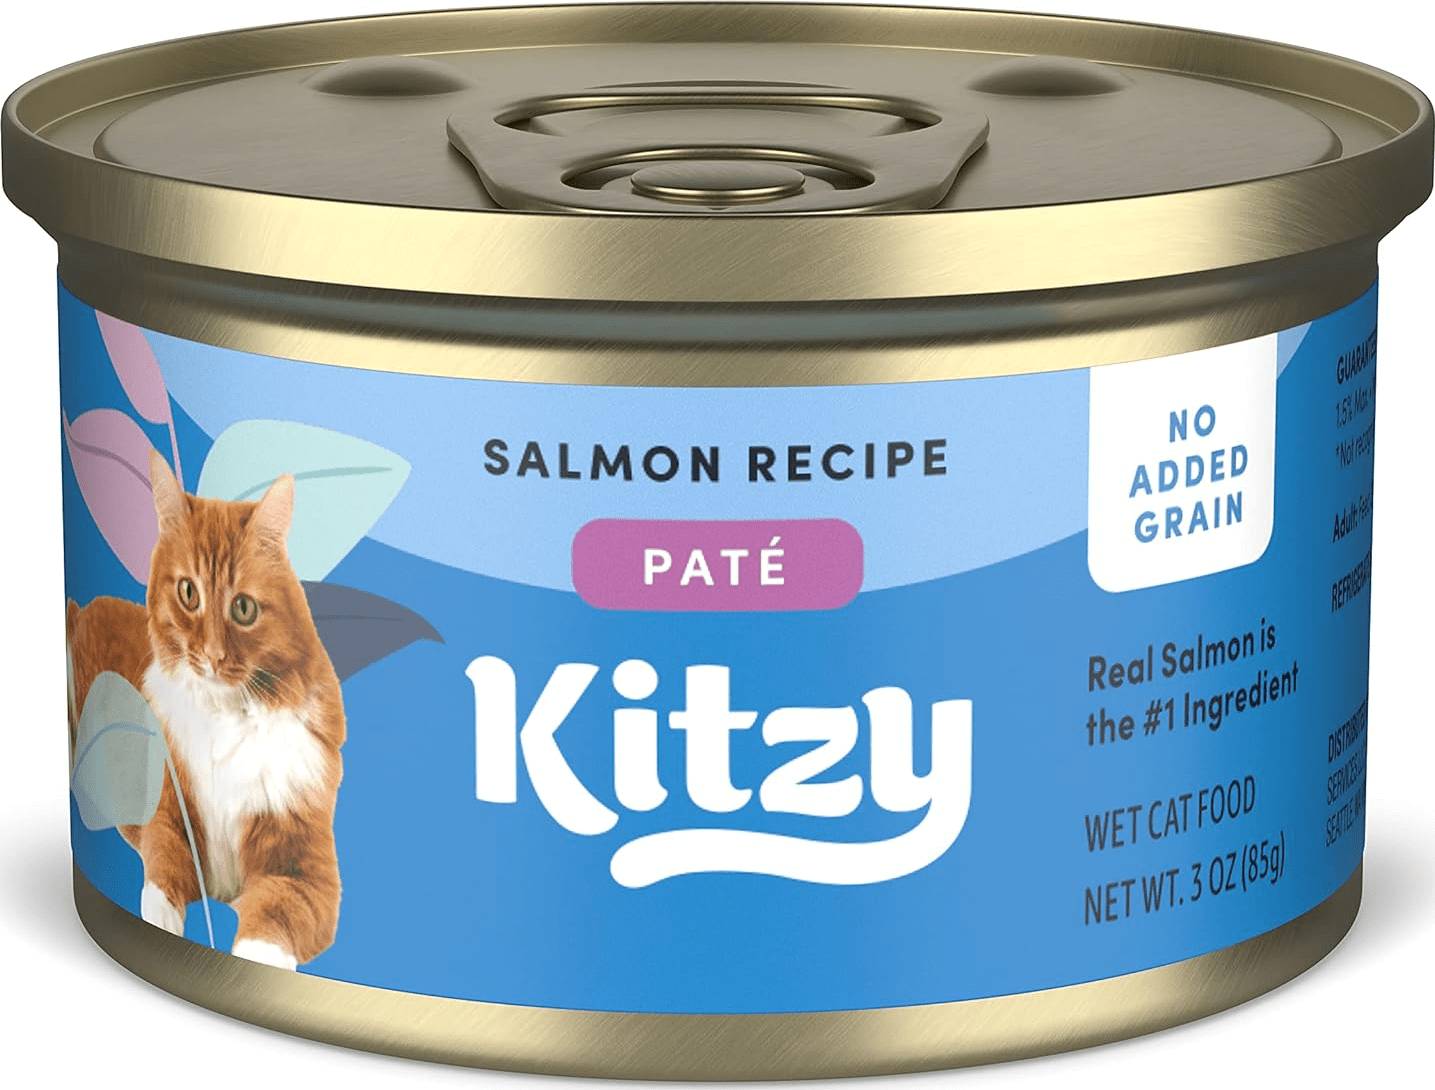 Kitzy Salmon Pate